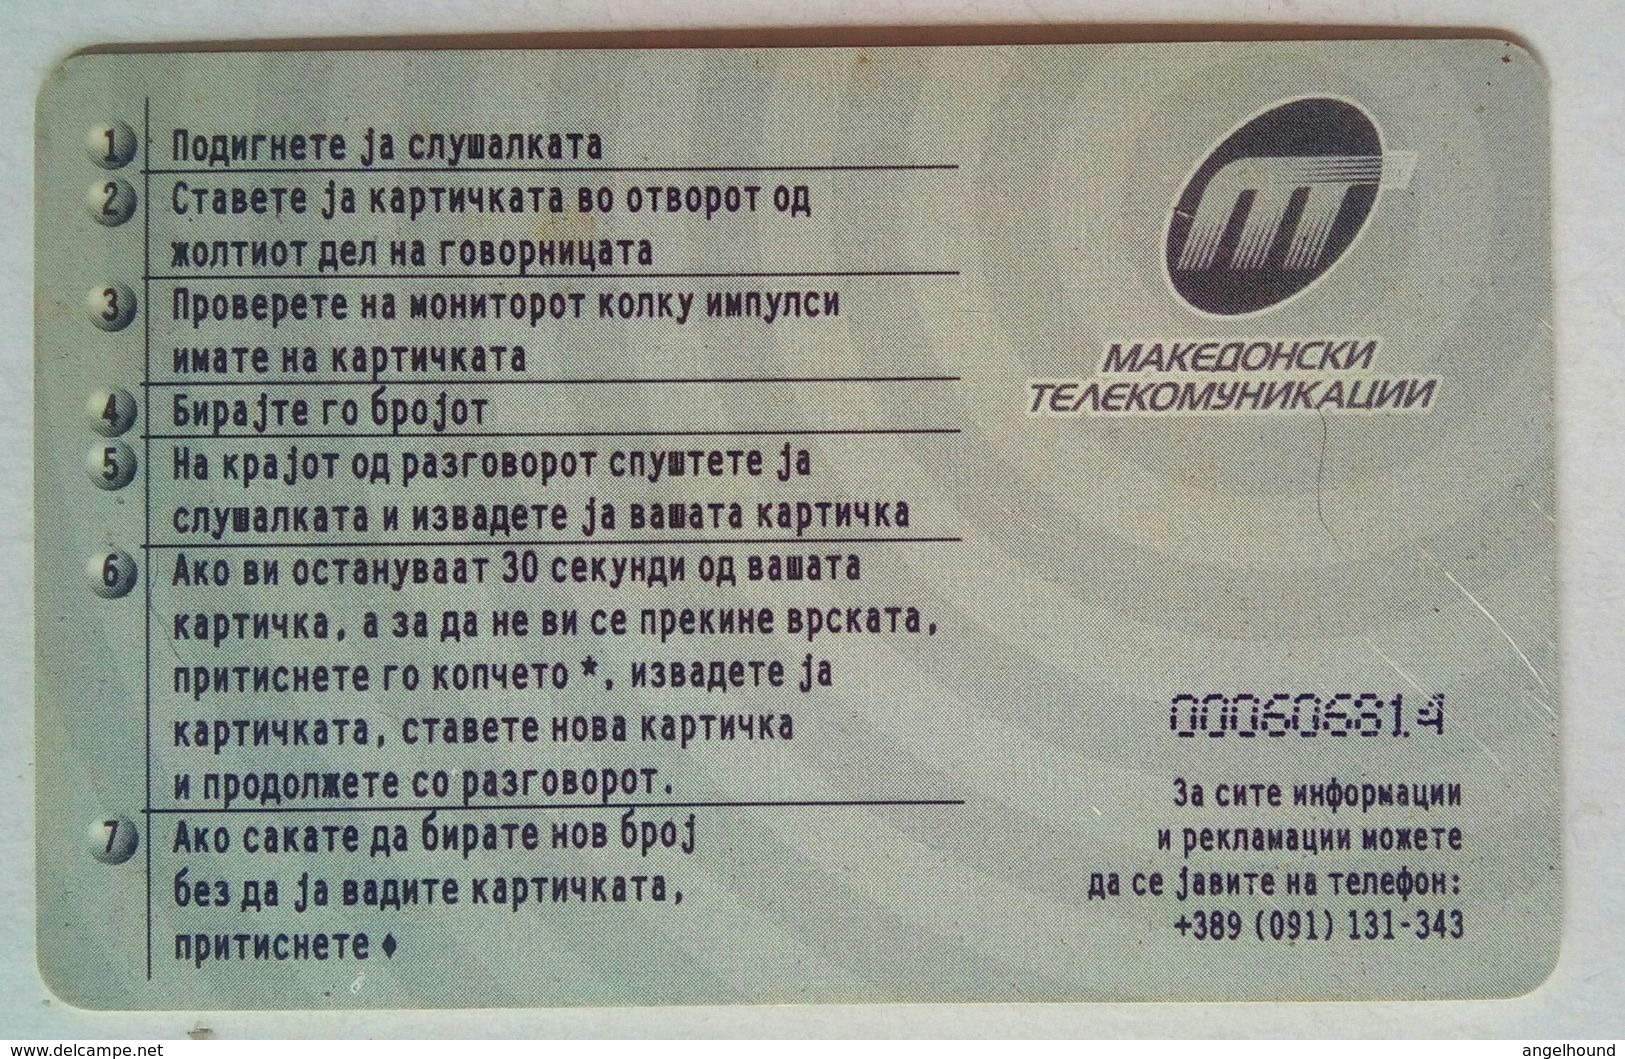 Macedonia Chip Card - Macedonia Del Norte